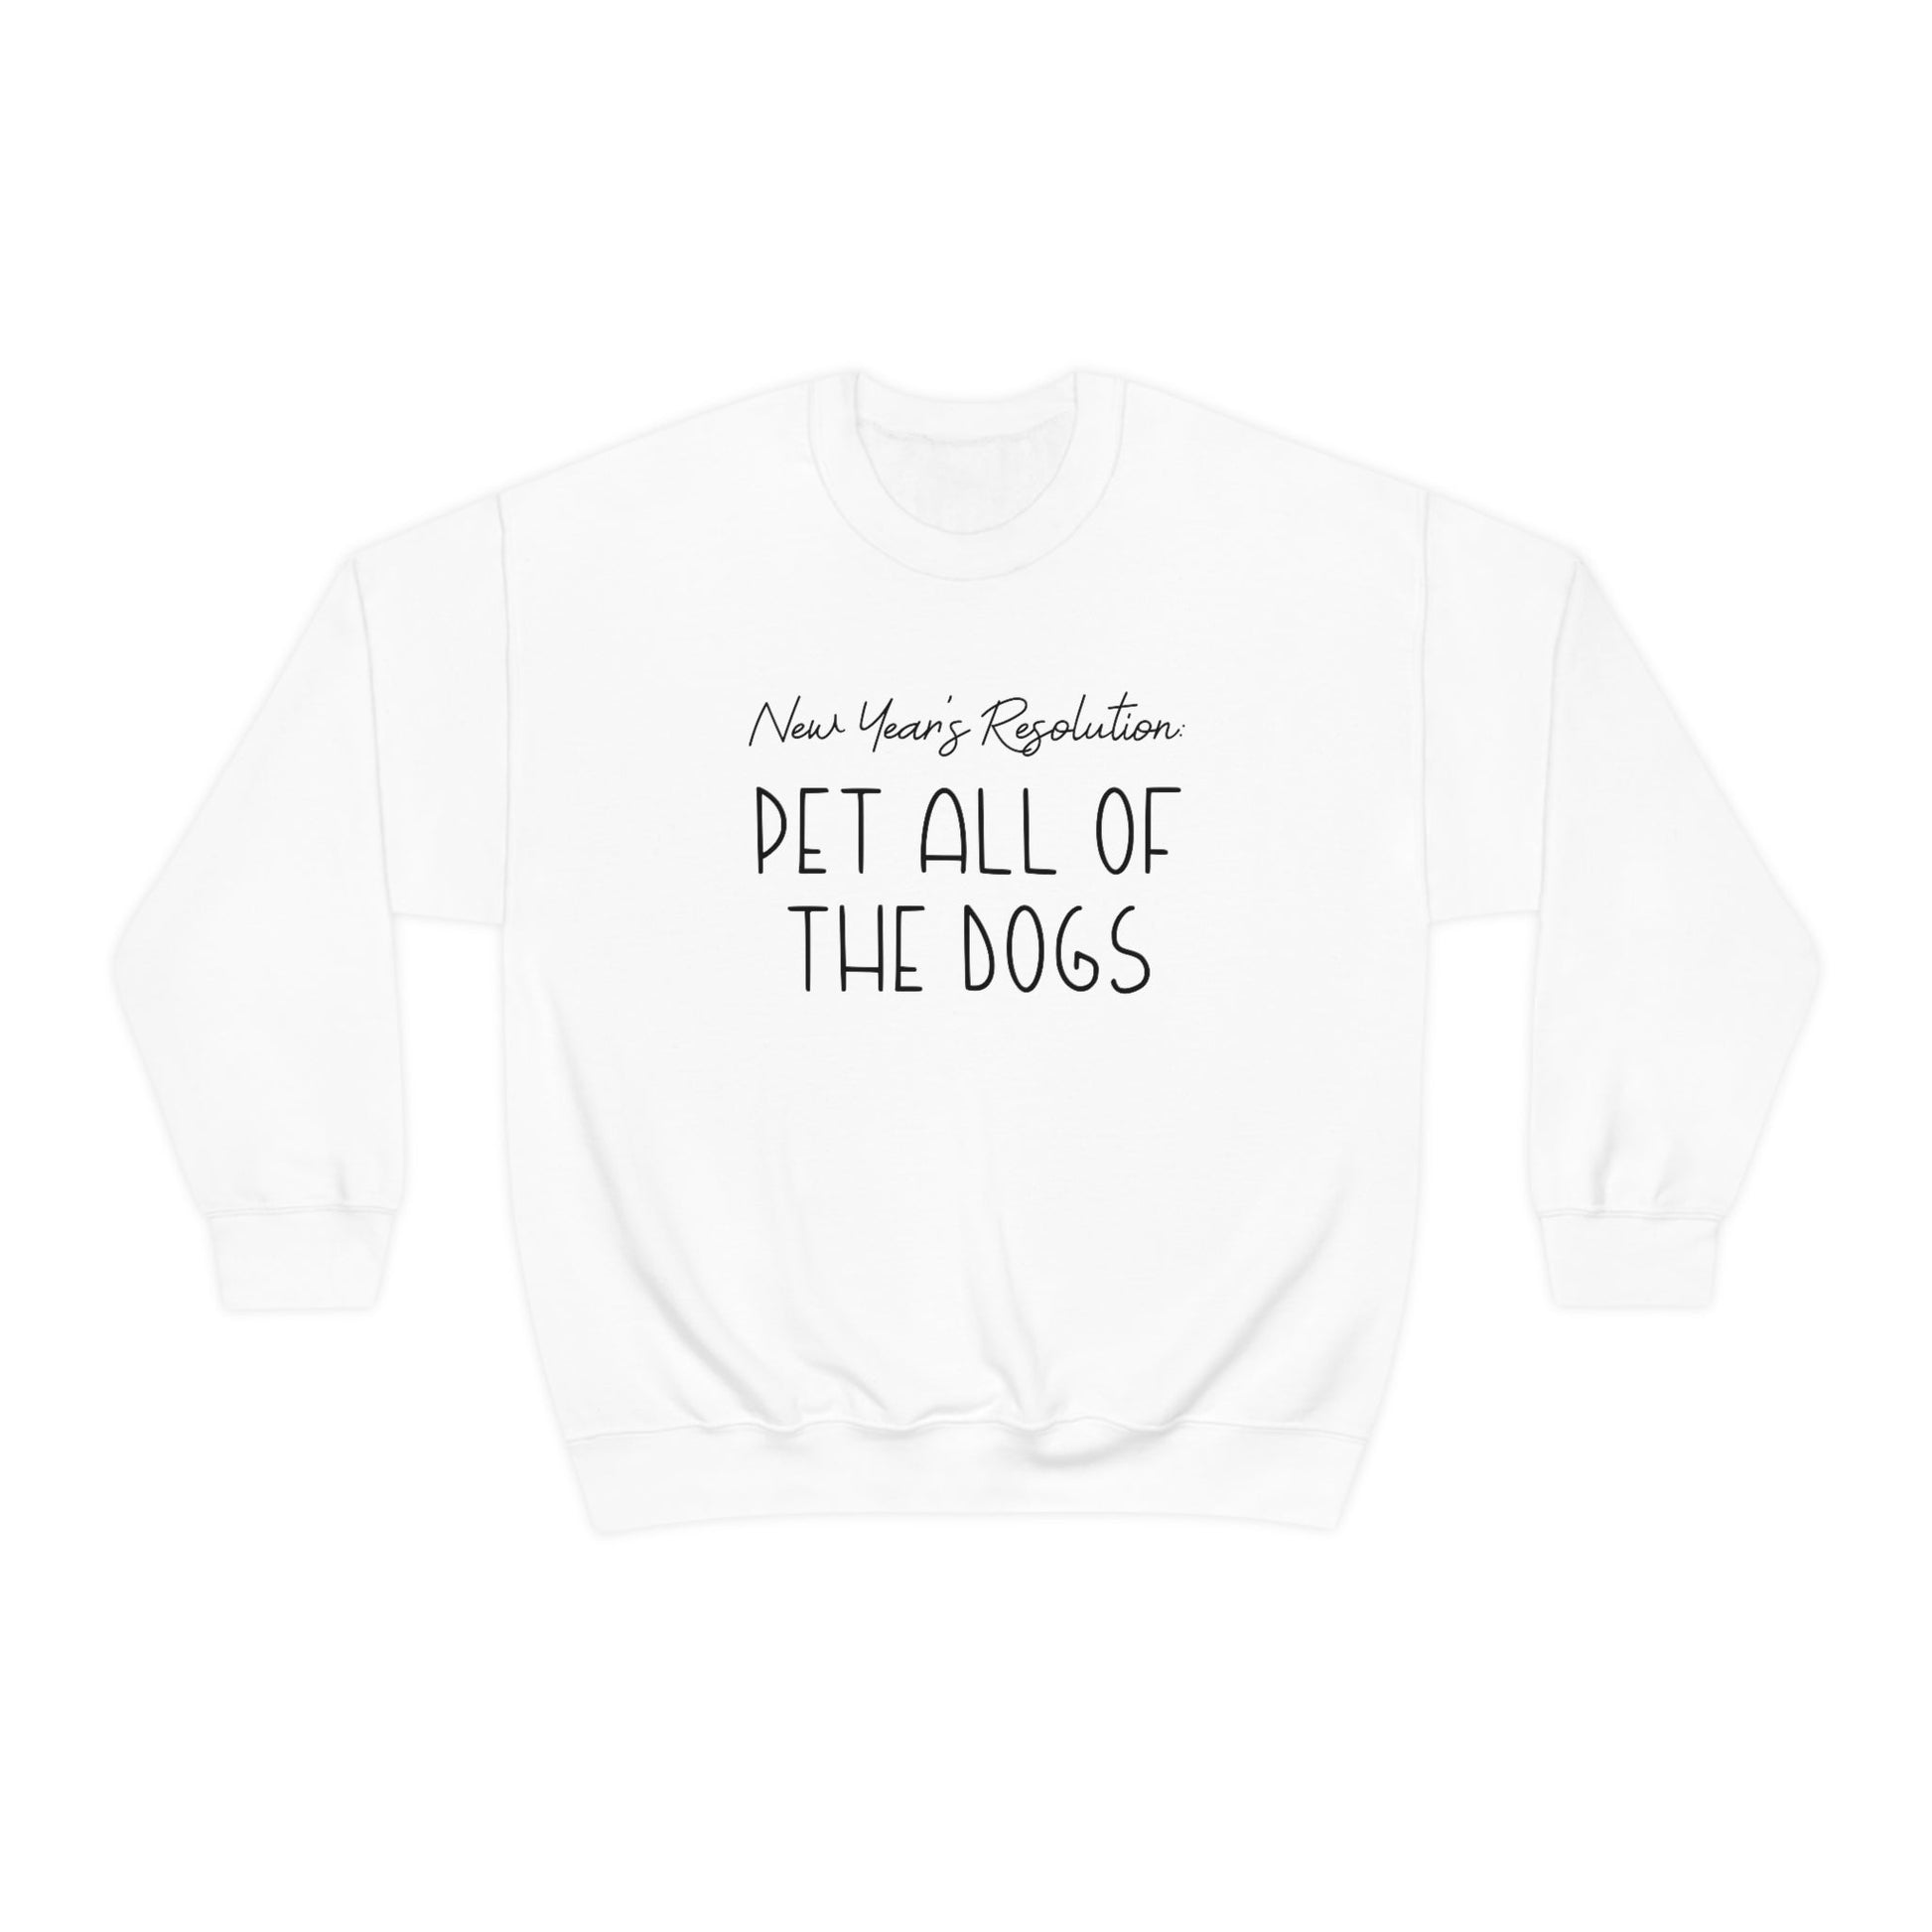 New Year's Resolution: Pet All Of The Dogs | Crewneck Sweatshirt - Detezi Designs-12604970422657498663